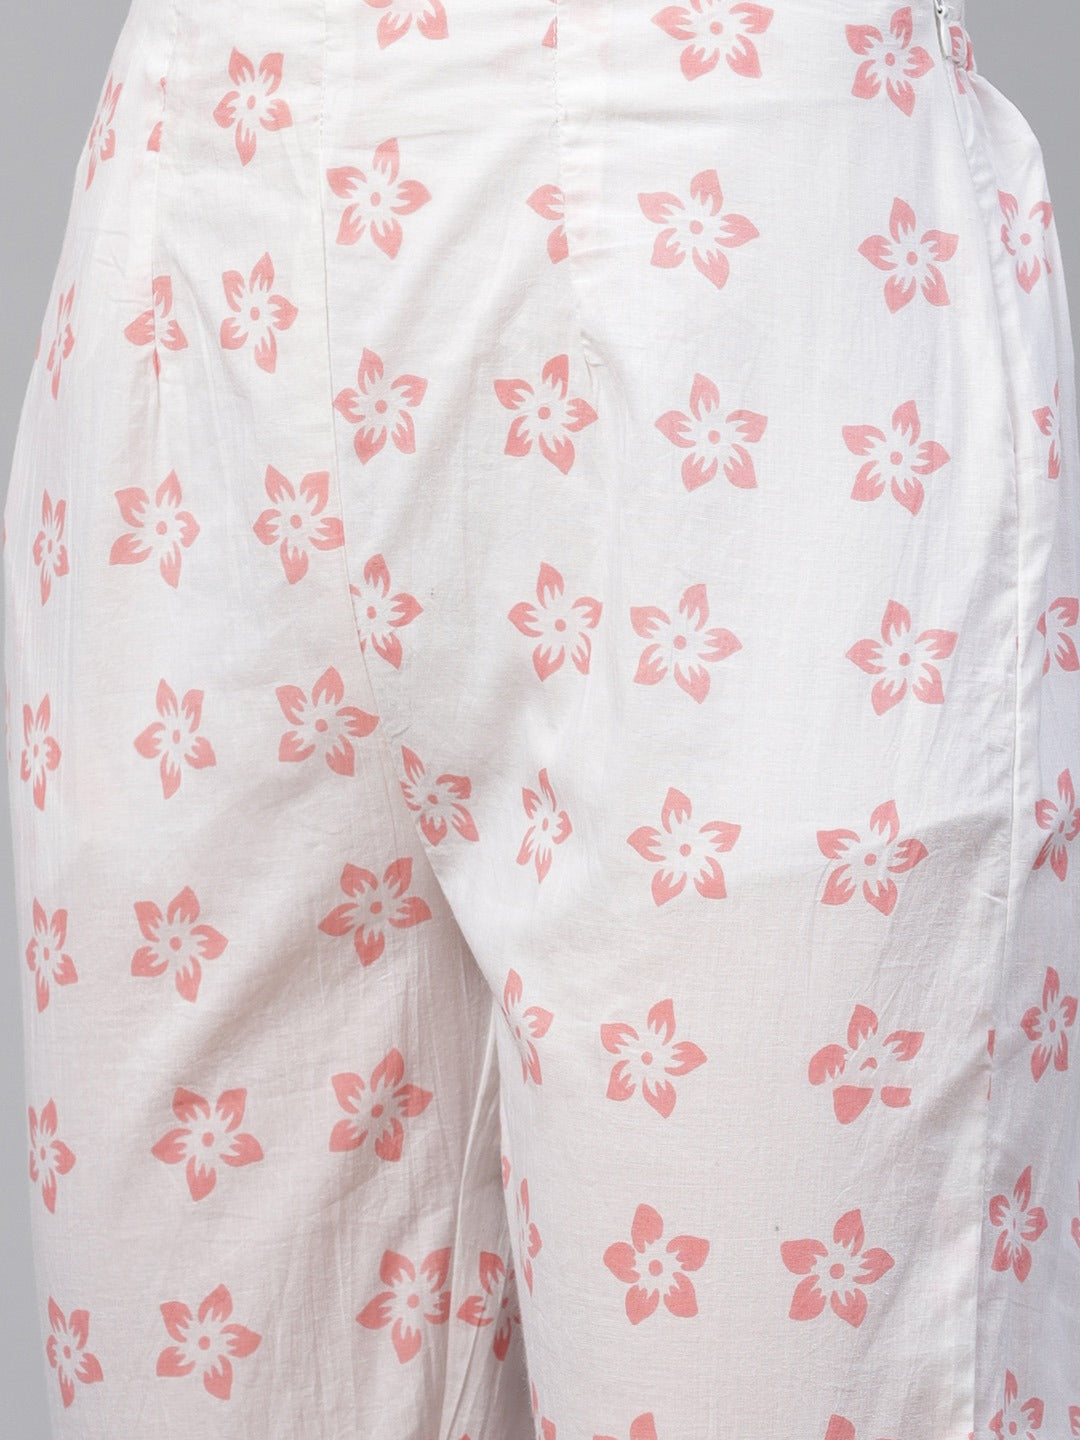 Women's Pink & White Ethnic Motifs Printed Pure Cotton Kurta with Trousers & Dupatta ( JOKS D24P 1402 Pink ) - Jompers